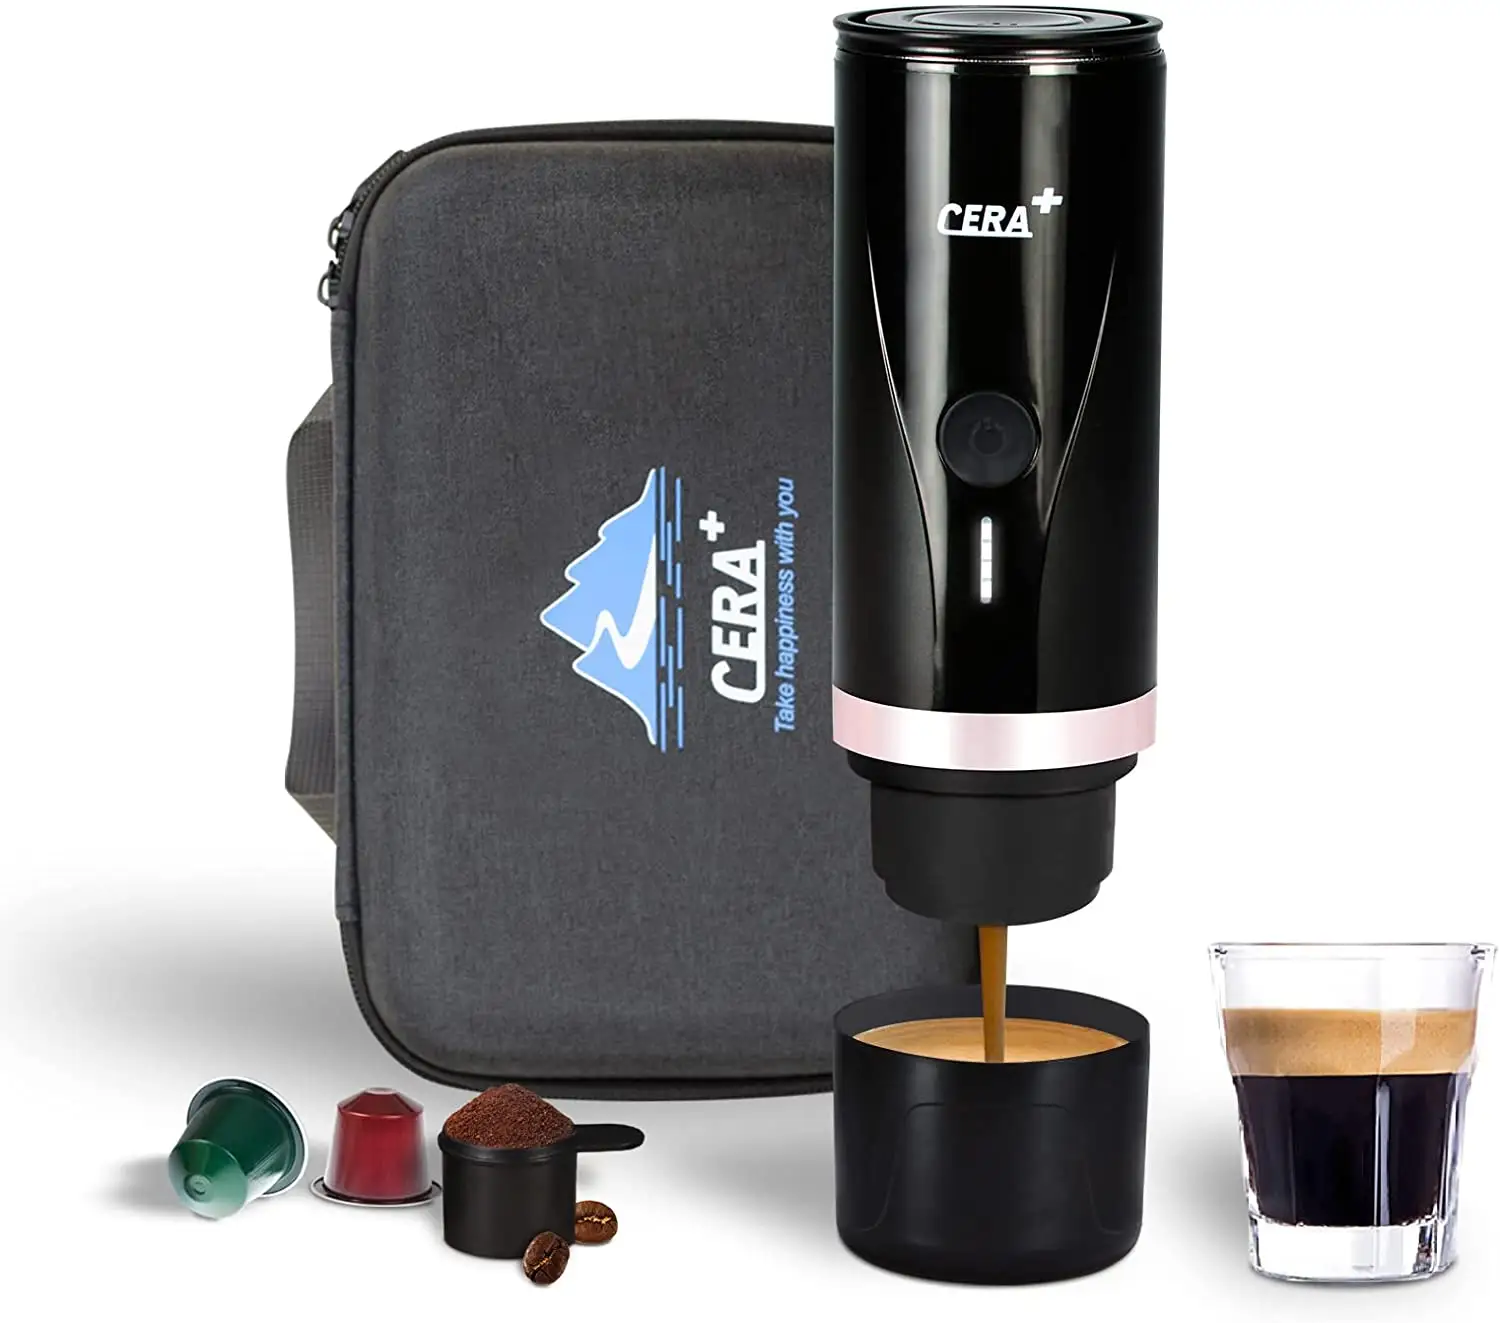 Espresso kahve araba makinesi elektrikli seyahat kahve makinesi 12V araba kullanımı Mini taşınabilir kahve makinesi